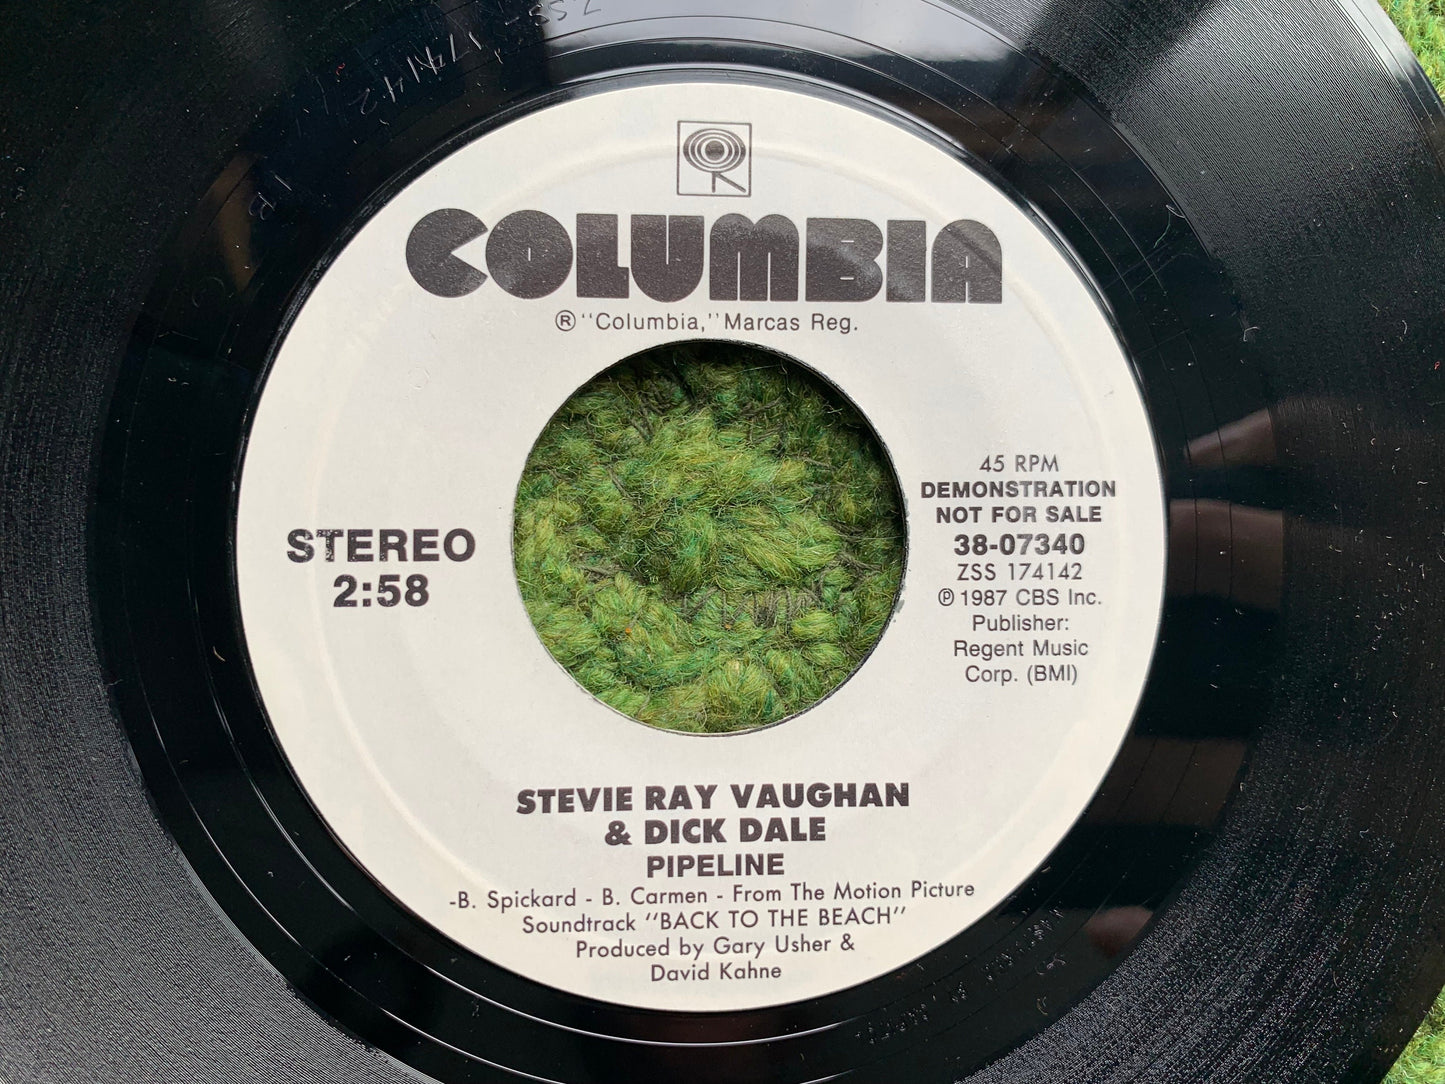 Stevie Ray Vaughan & Dick Dale Pipeline Single 45 Rpm 7" Records PROMO Vintage Vinyl Record